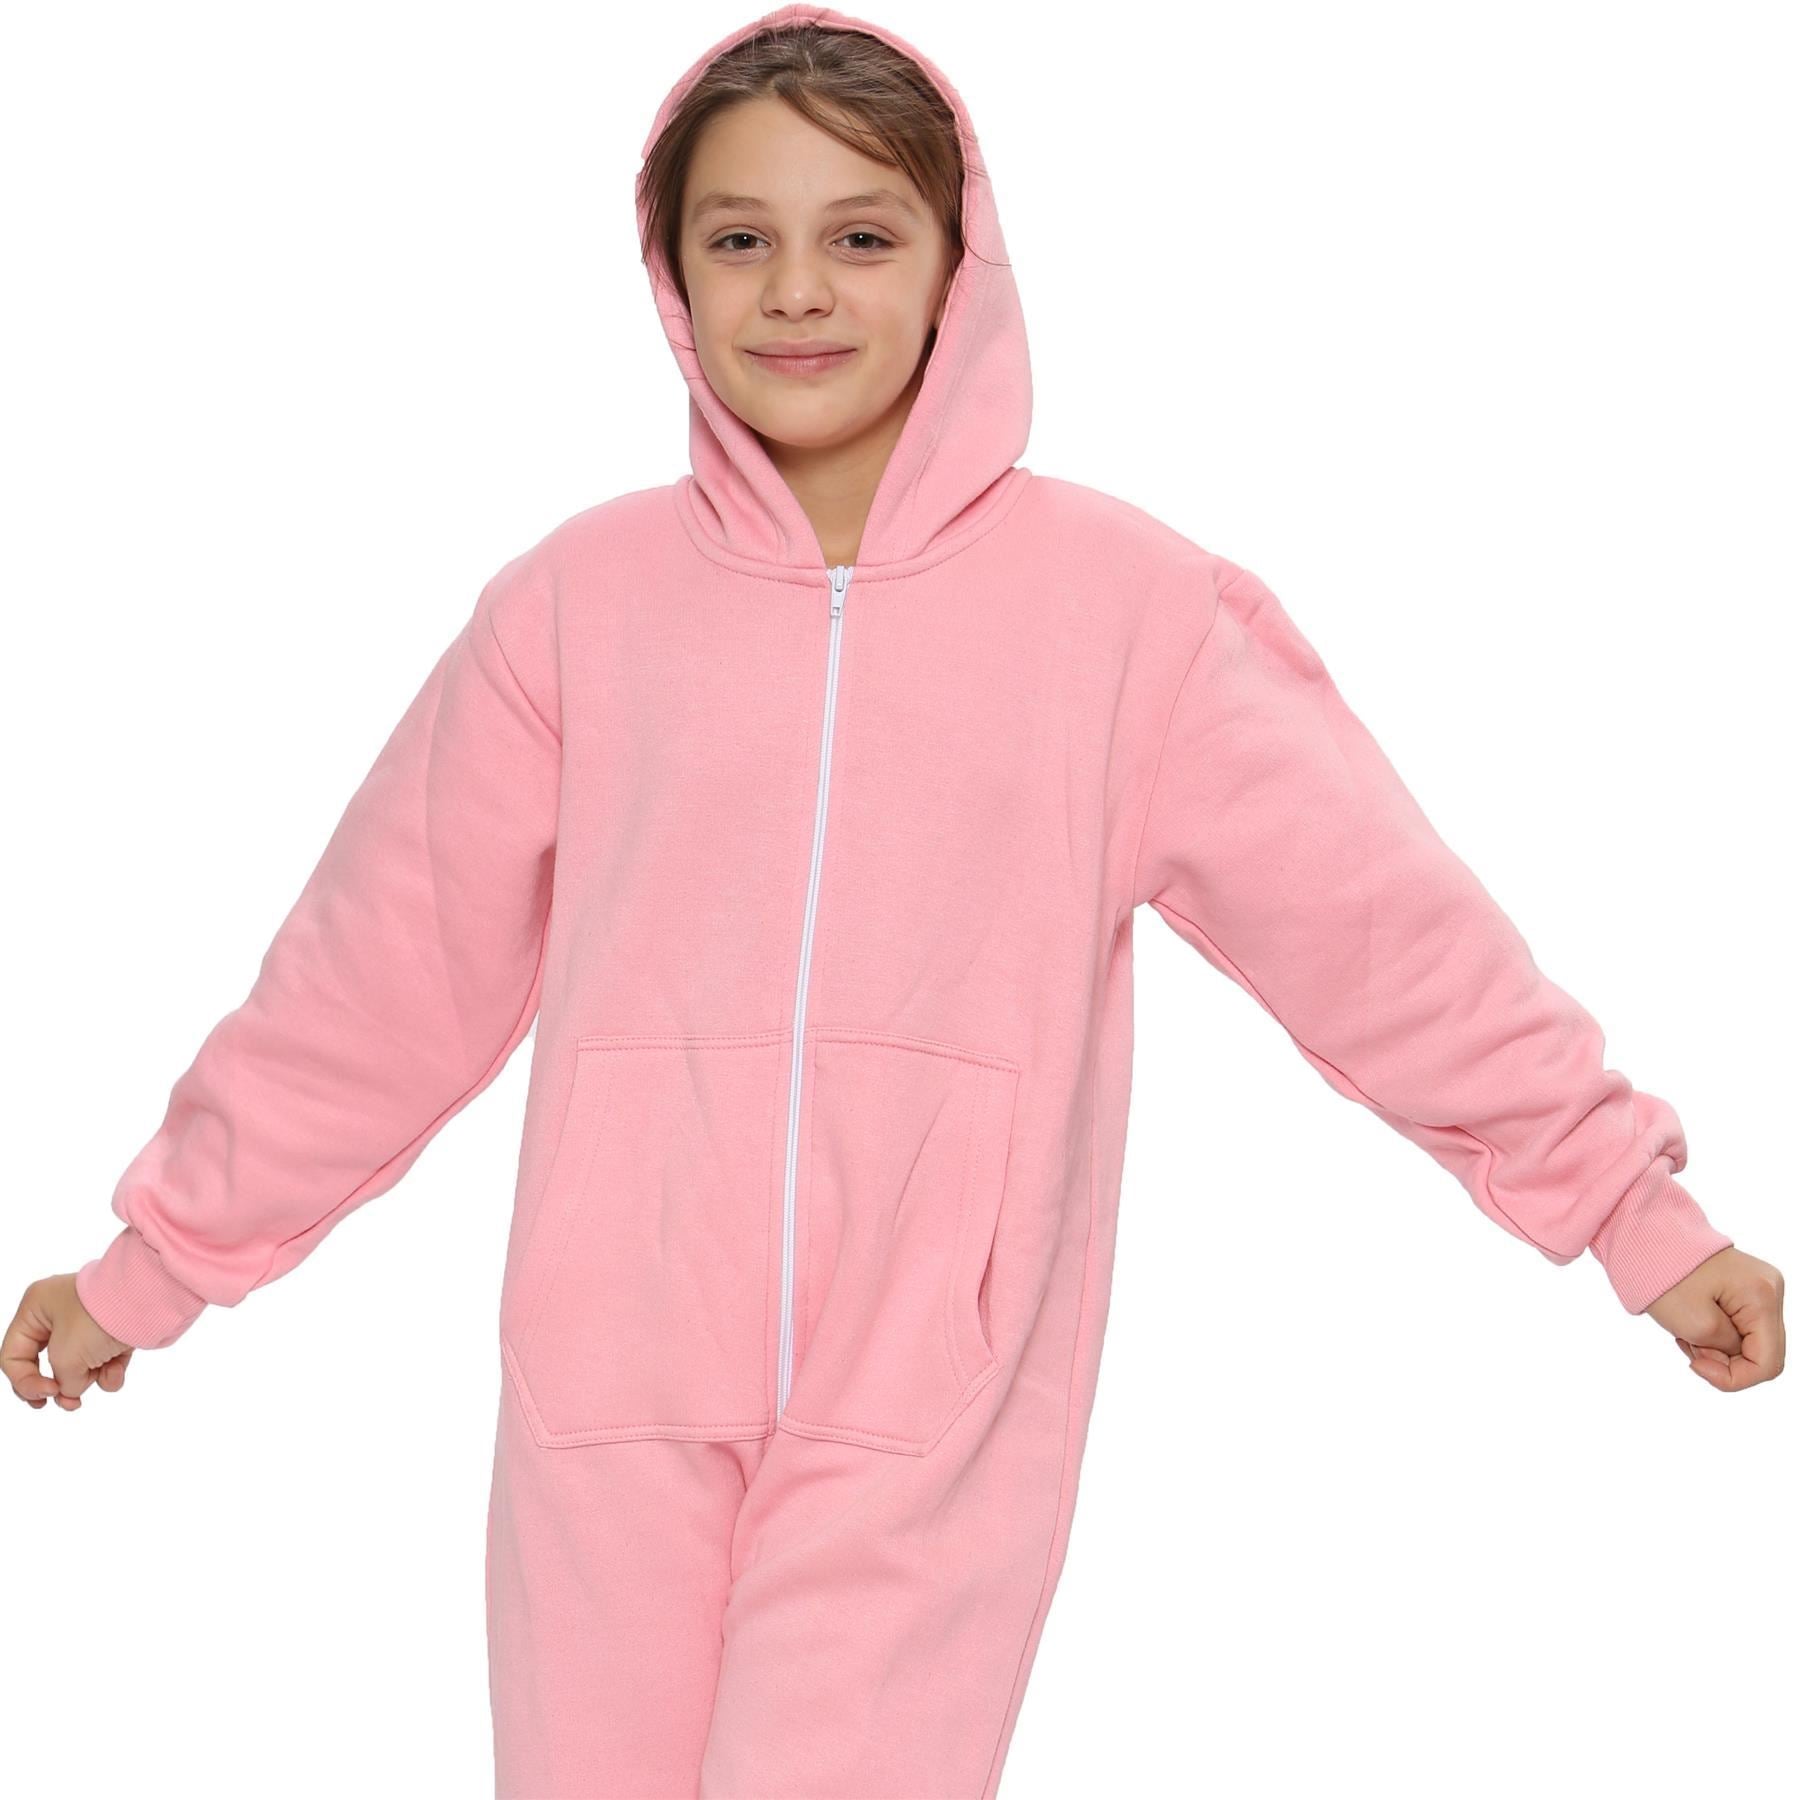 Kids Boys Girls Unisex Onesie Super Soft Fleece Hooded Zip Up Jumpsuit Loungewear Costume